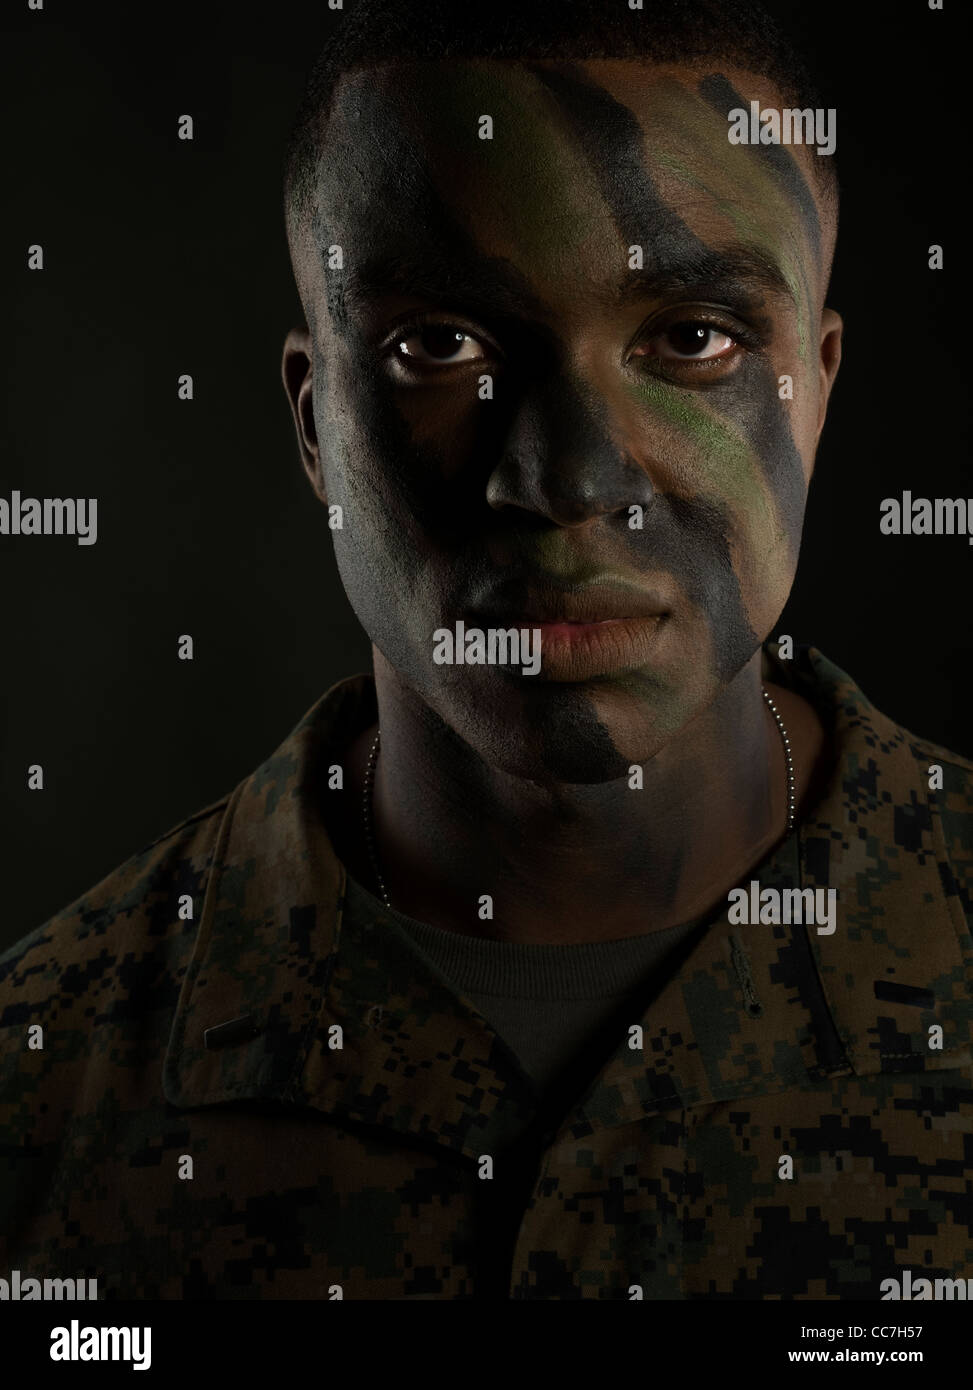 Stati Uniti Marine Corps Officer in MARPAT digital camouflage uniforme e camo face paint Foto Stock